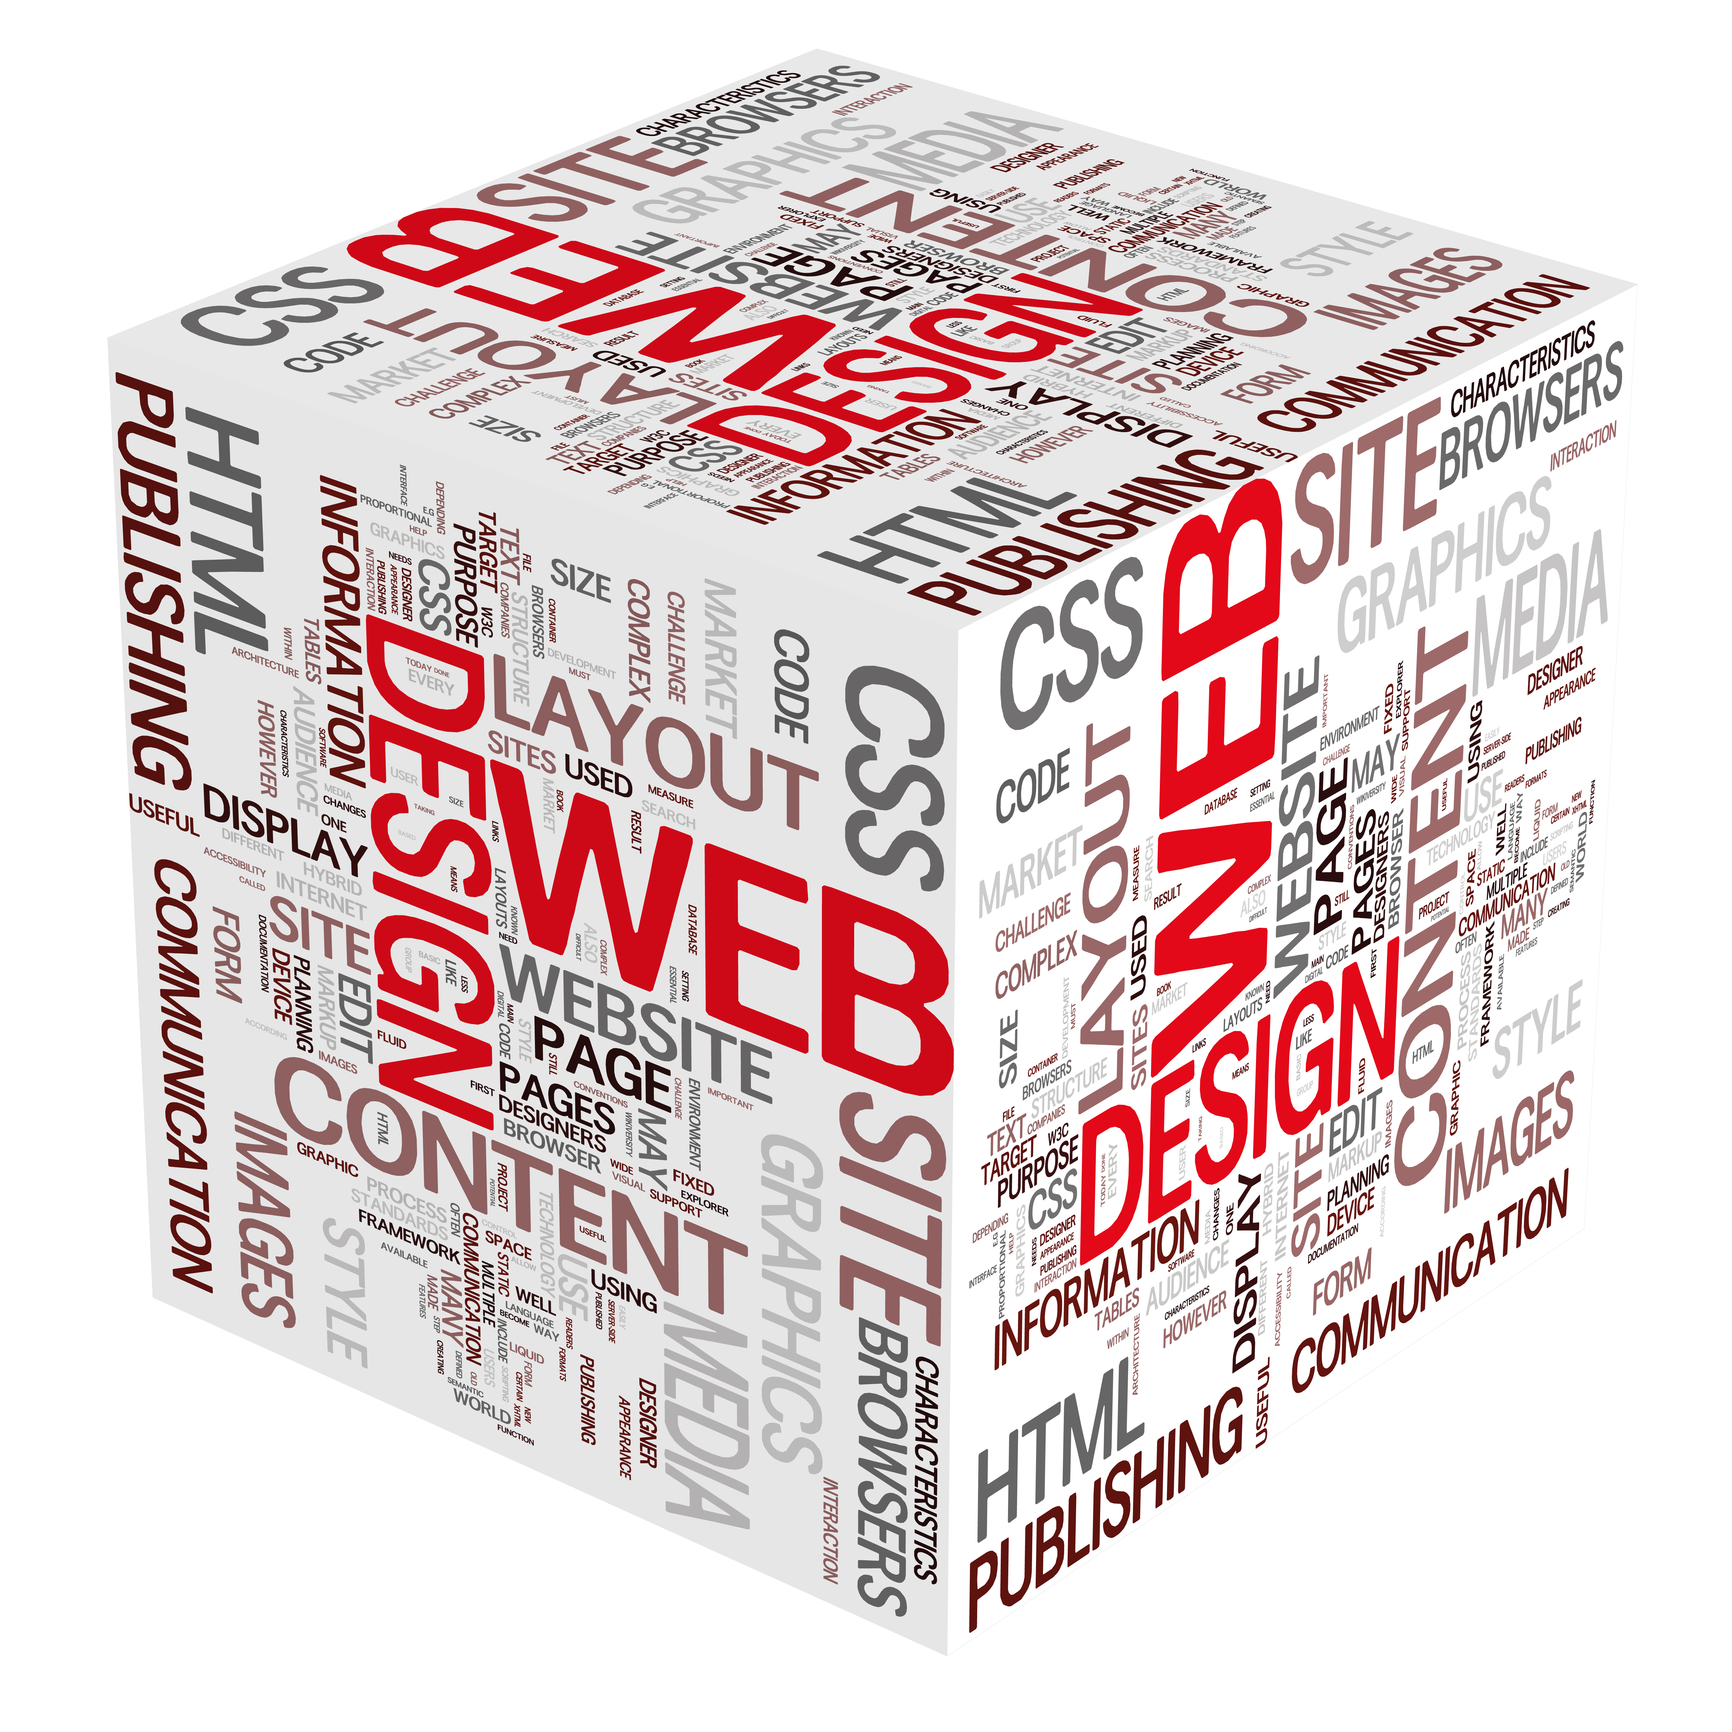 Imaginea web care te avantajeaza in webdesign